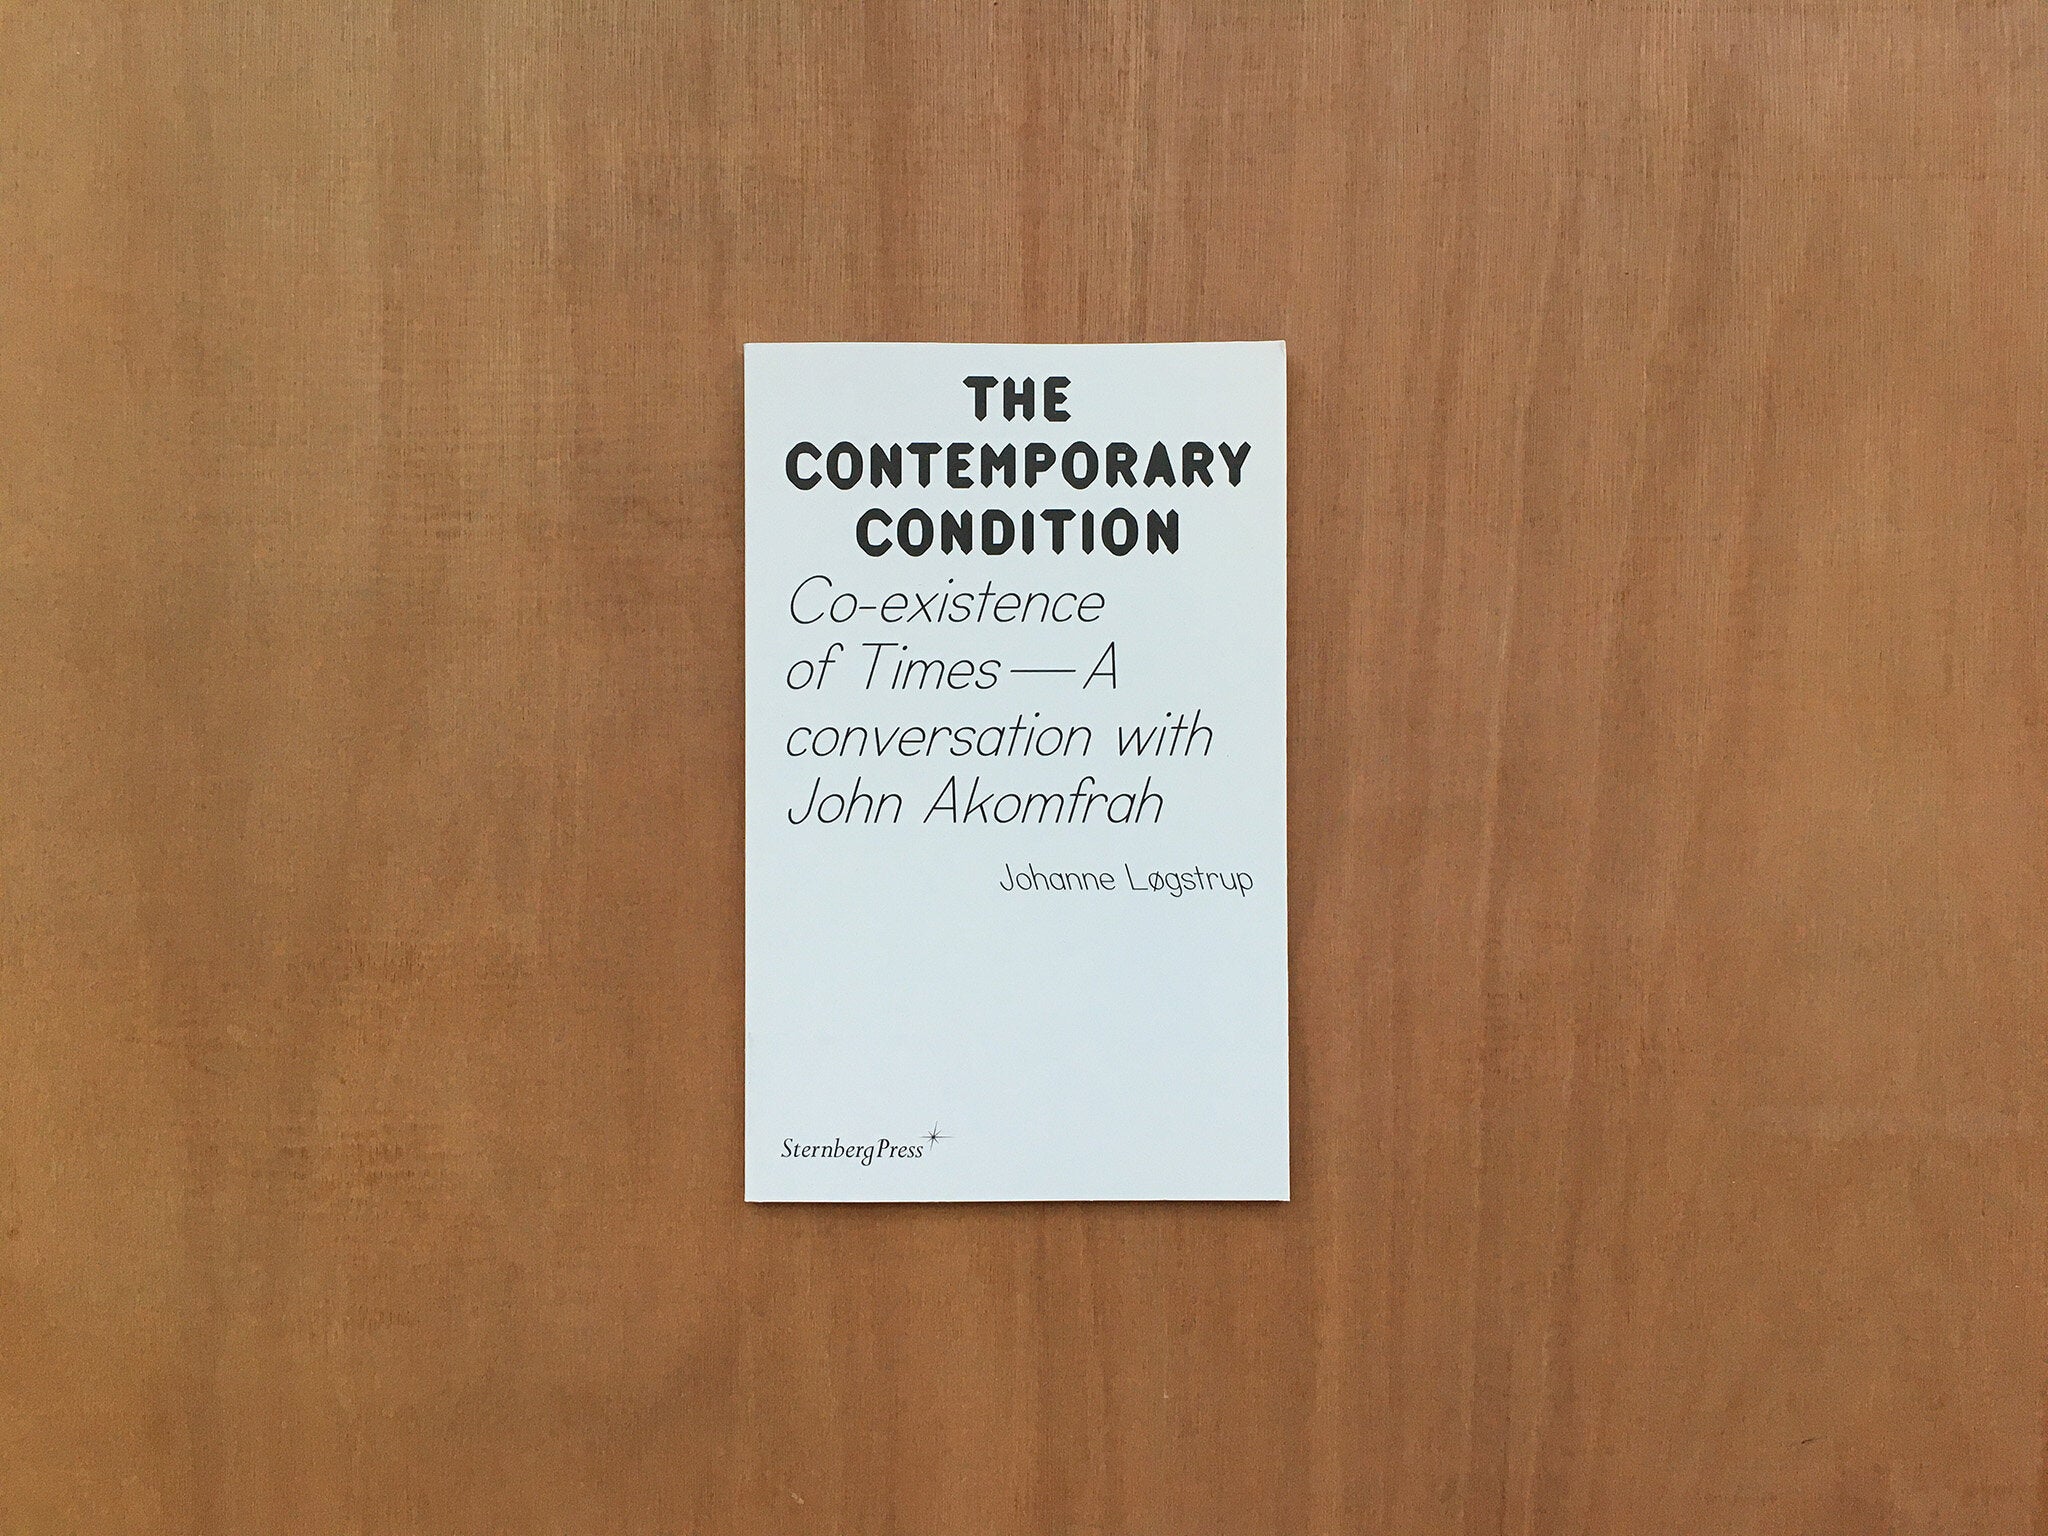 CO-EXISTENCE OF TIMES: A CONVERSATION WITH JOHN AKOMFRAH by Johanne Løgstrup